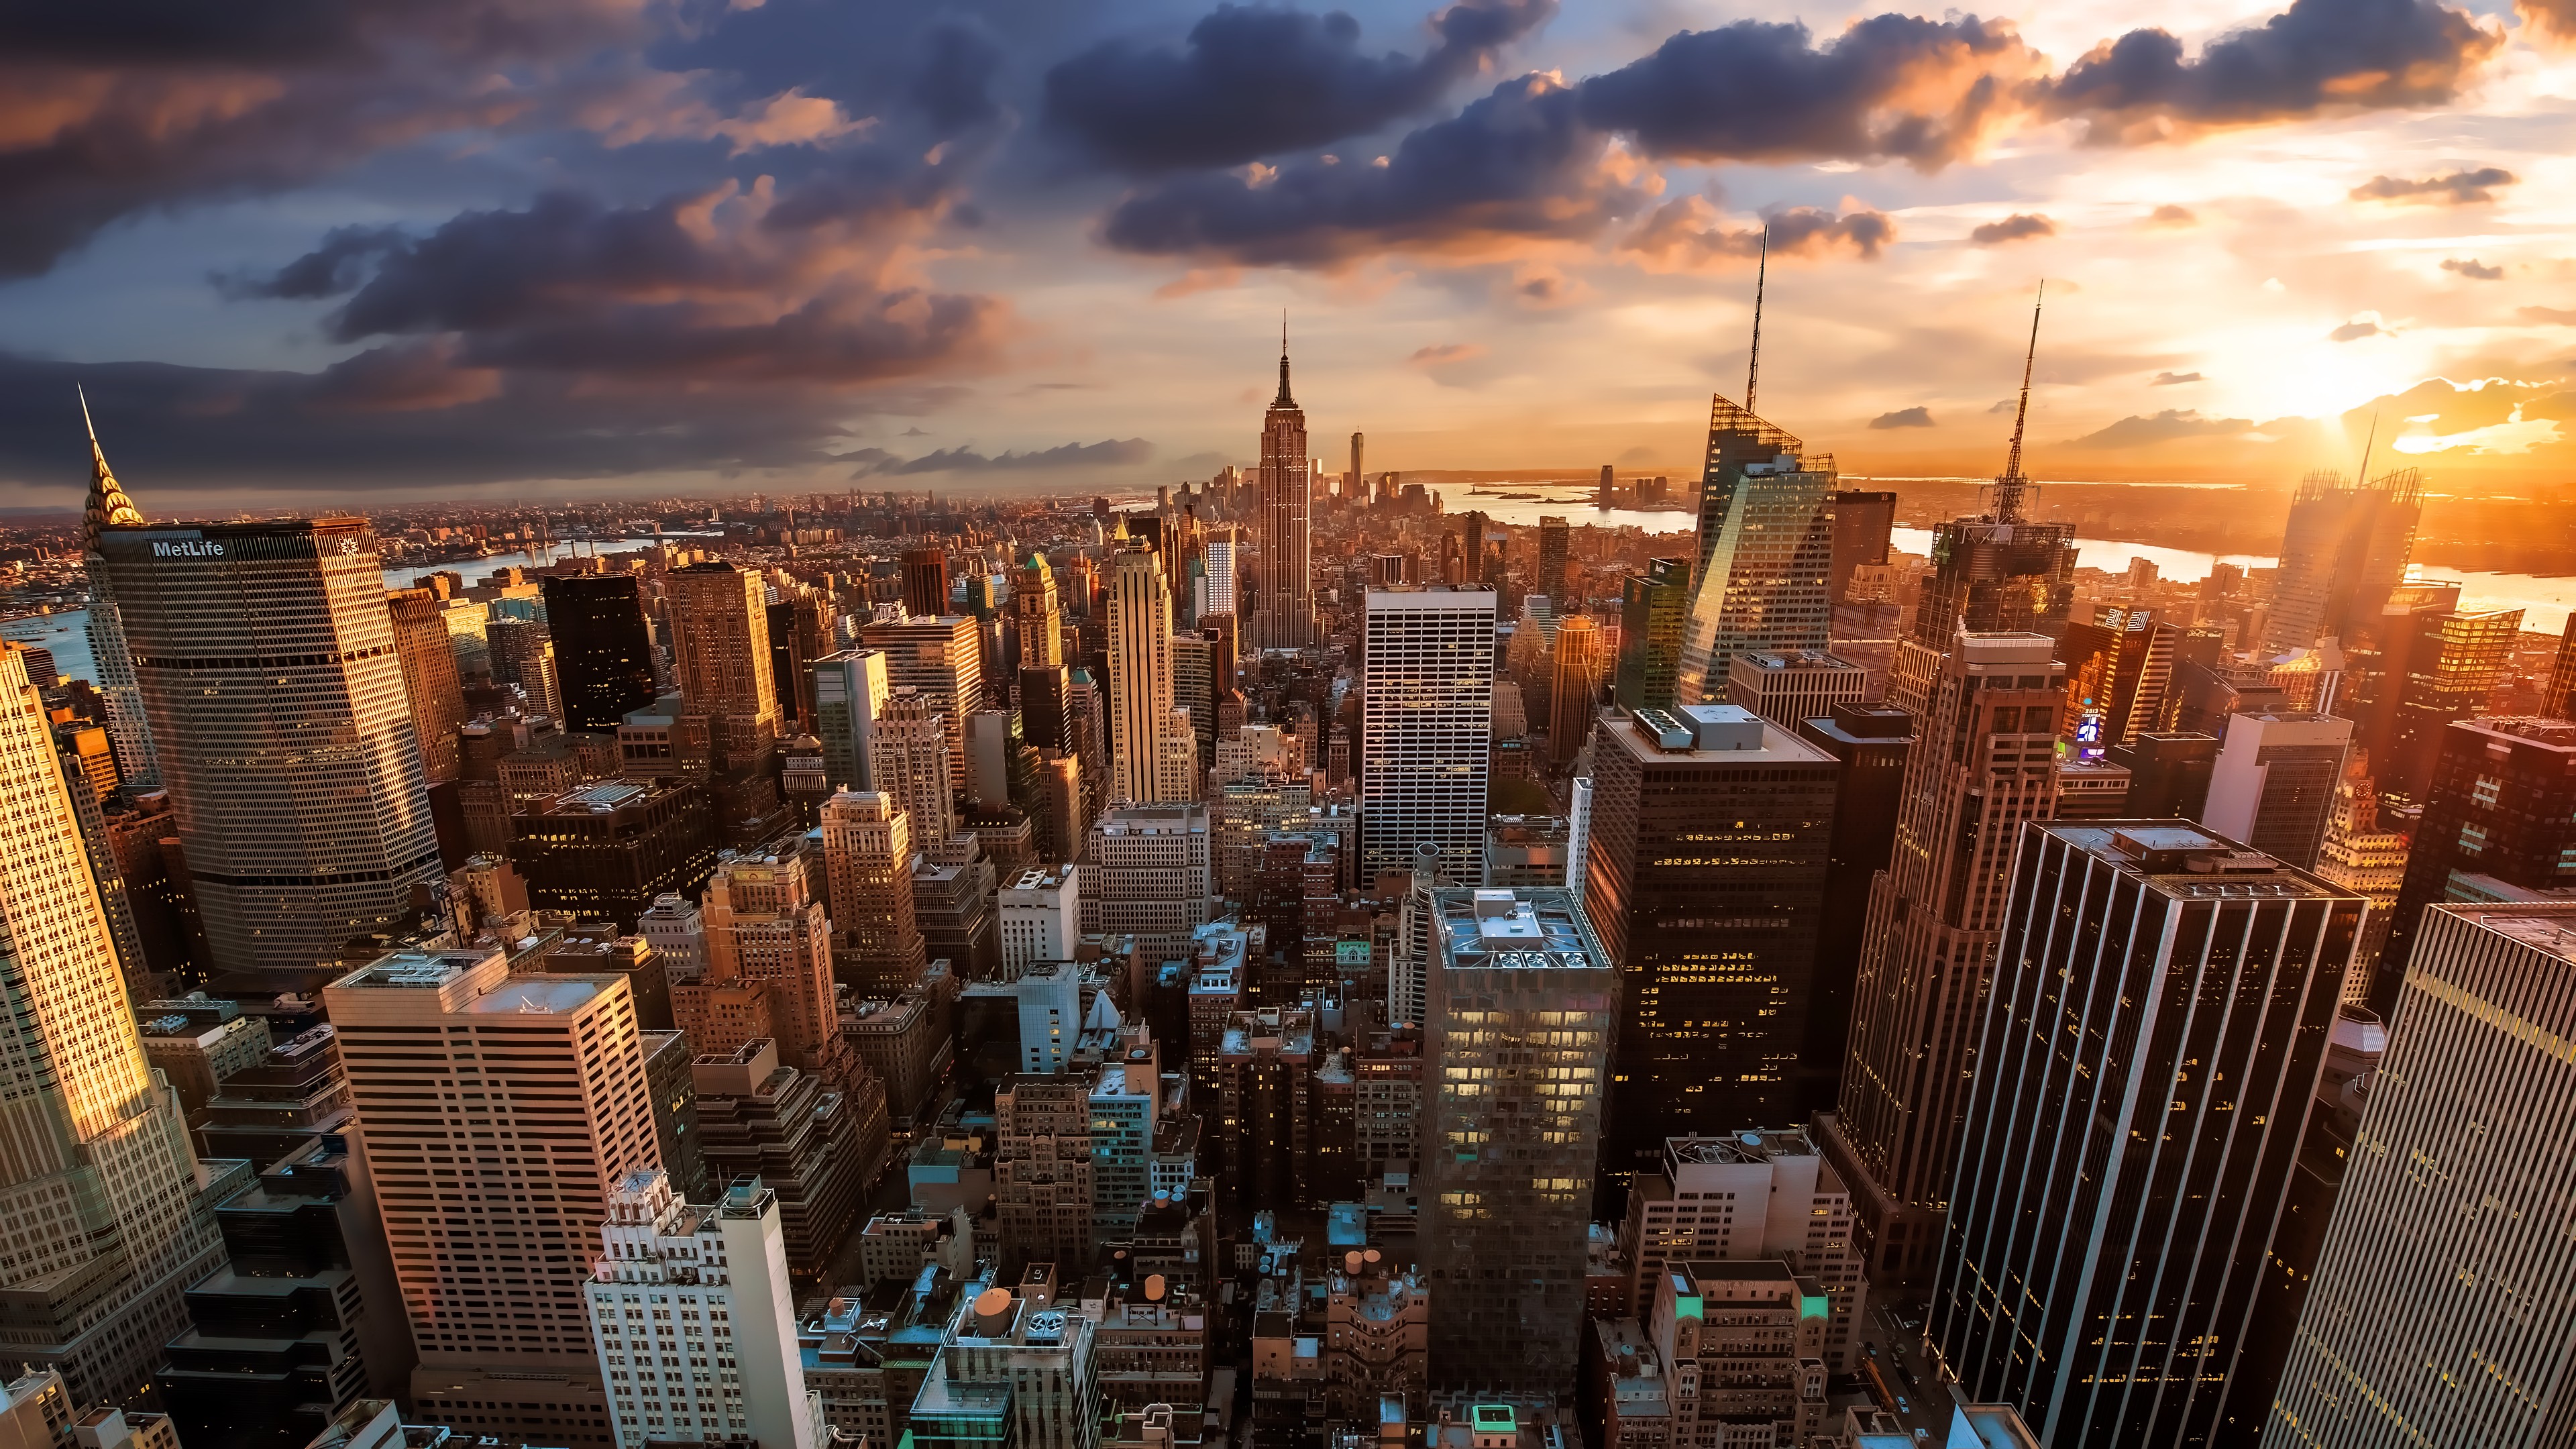 General 3840x2160 New York City city Manhattan skyscraper cityscape sunset orange sky Dominic Kamp